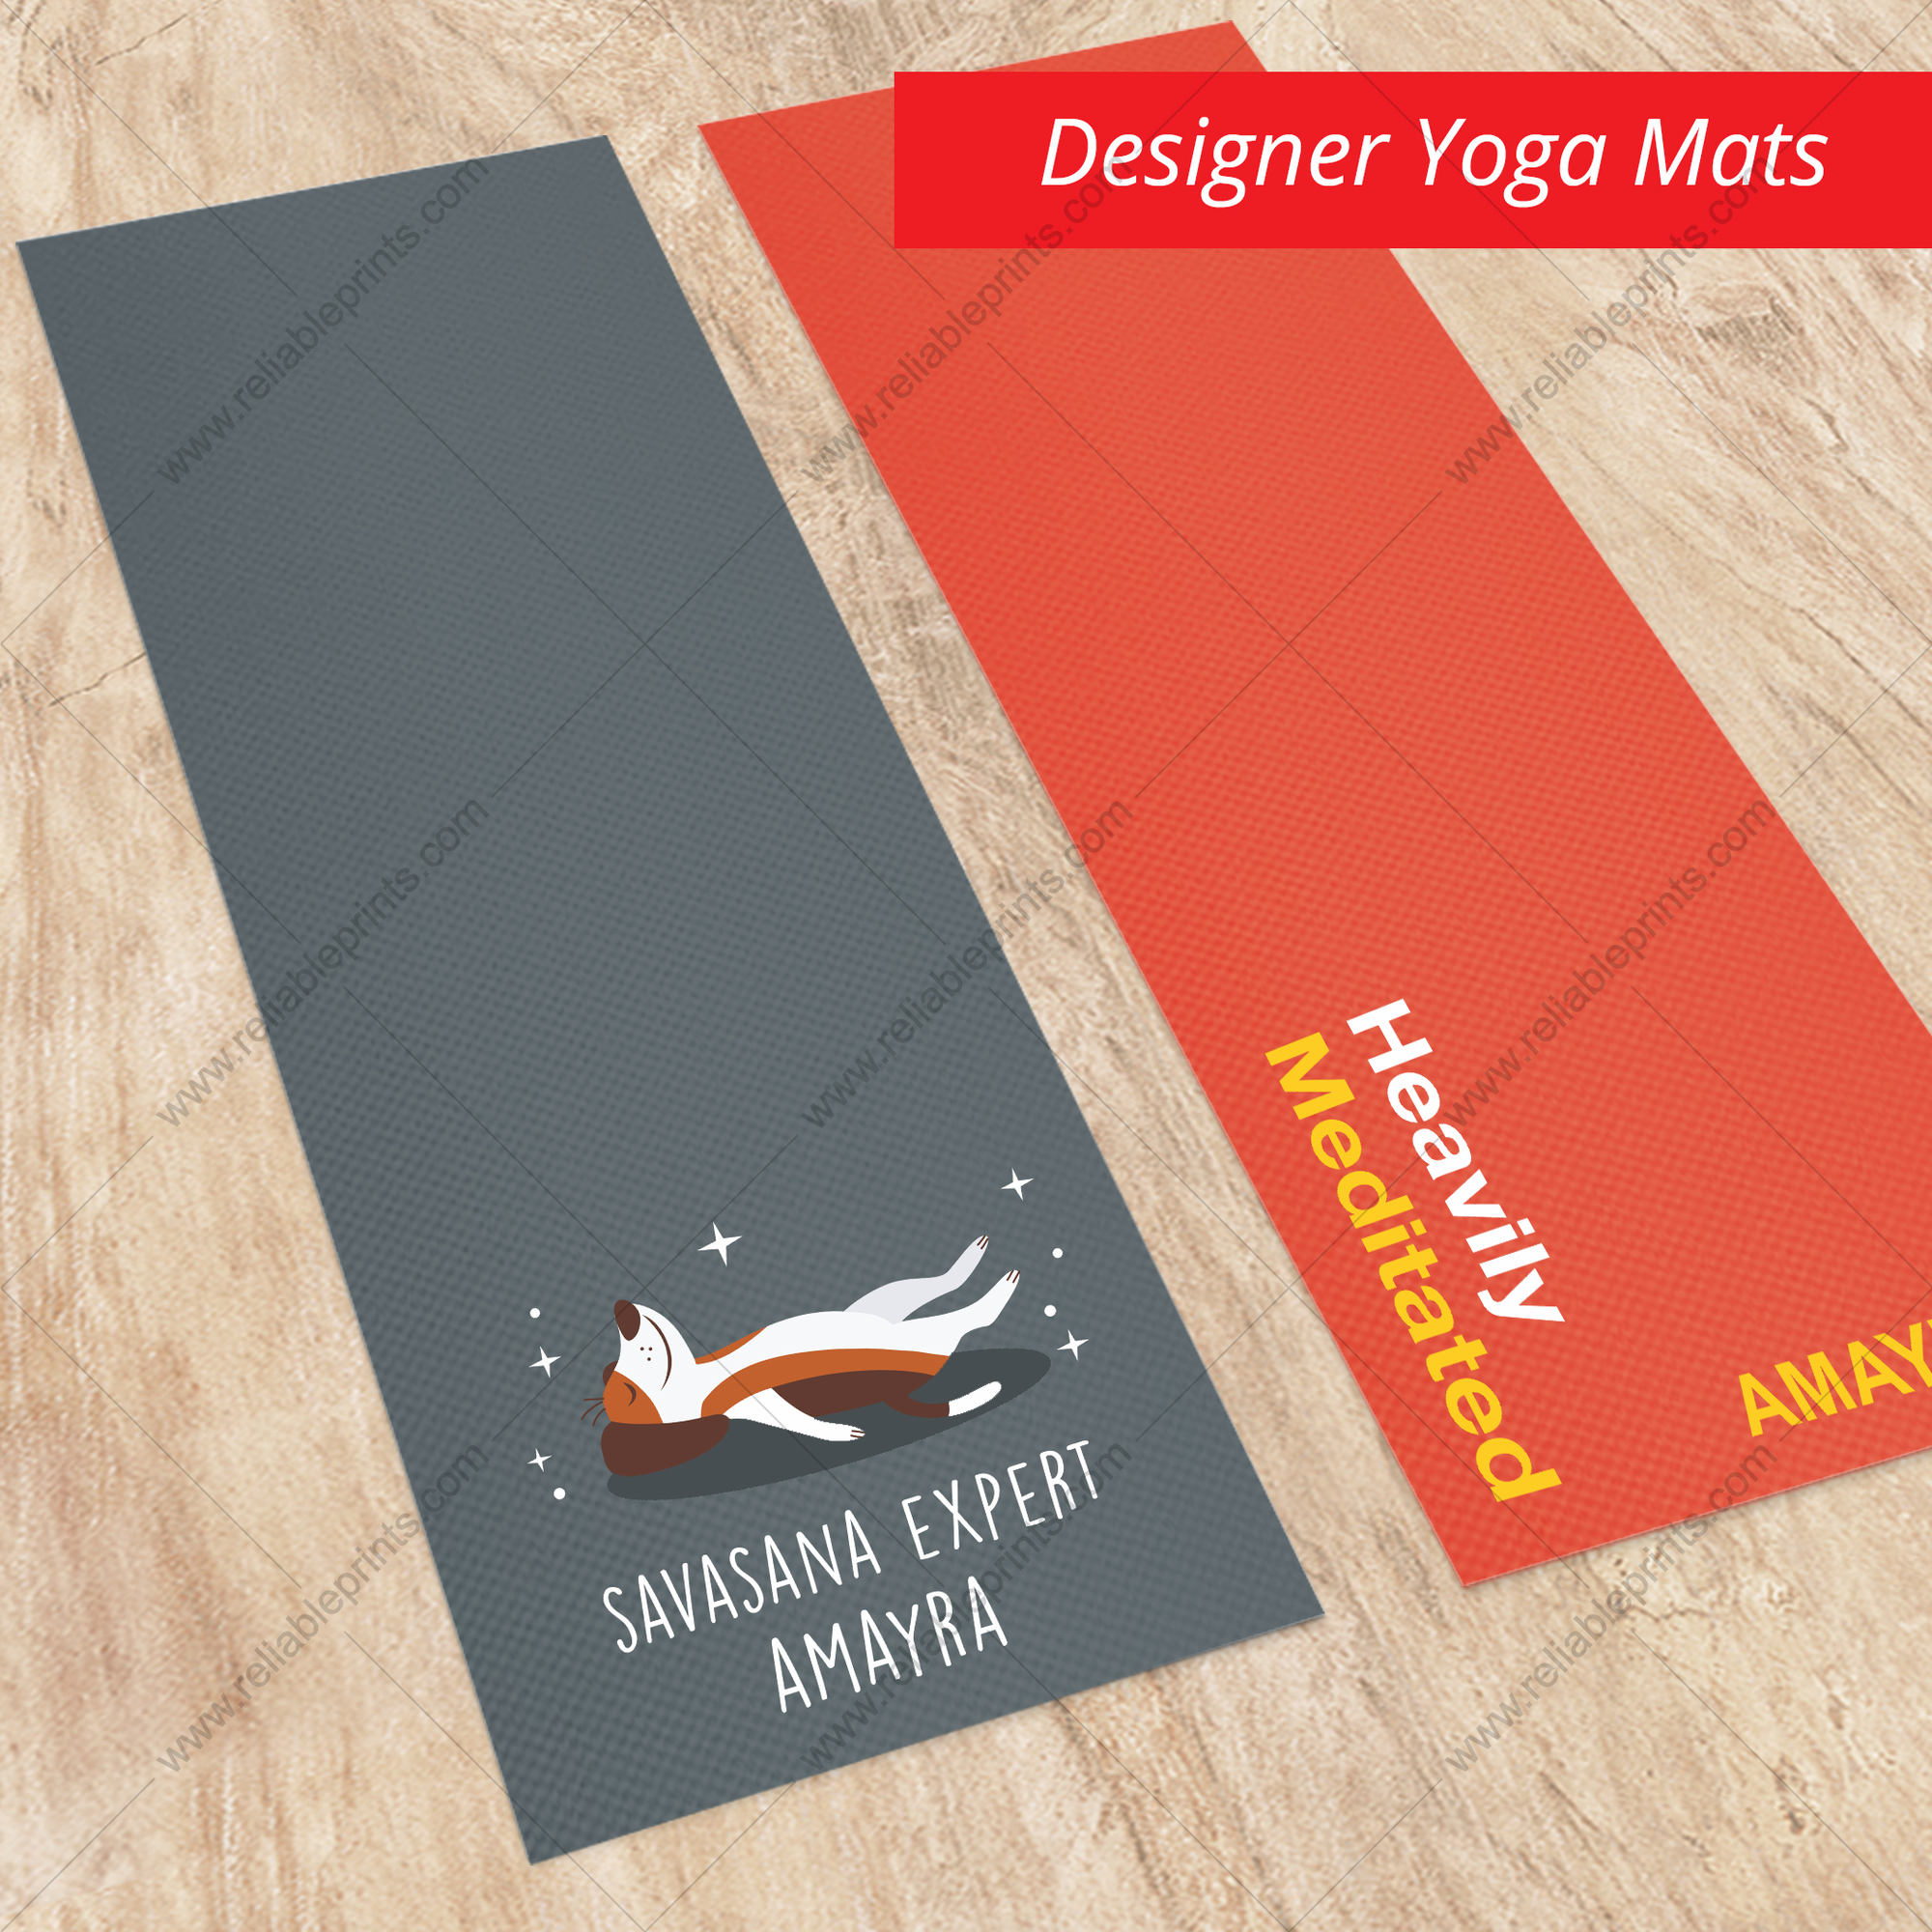 Designer Yoga Mats